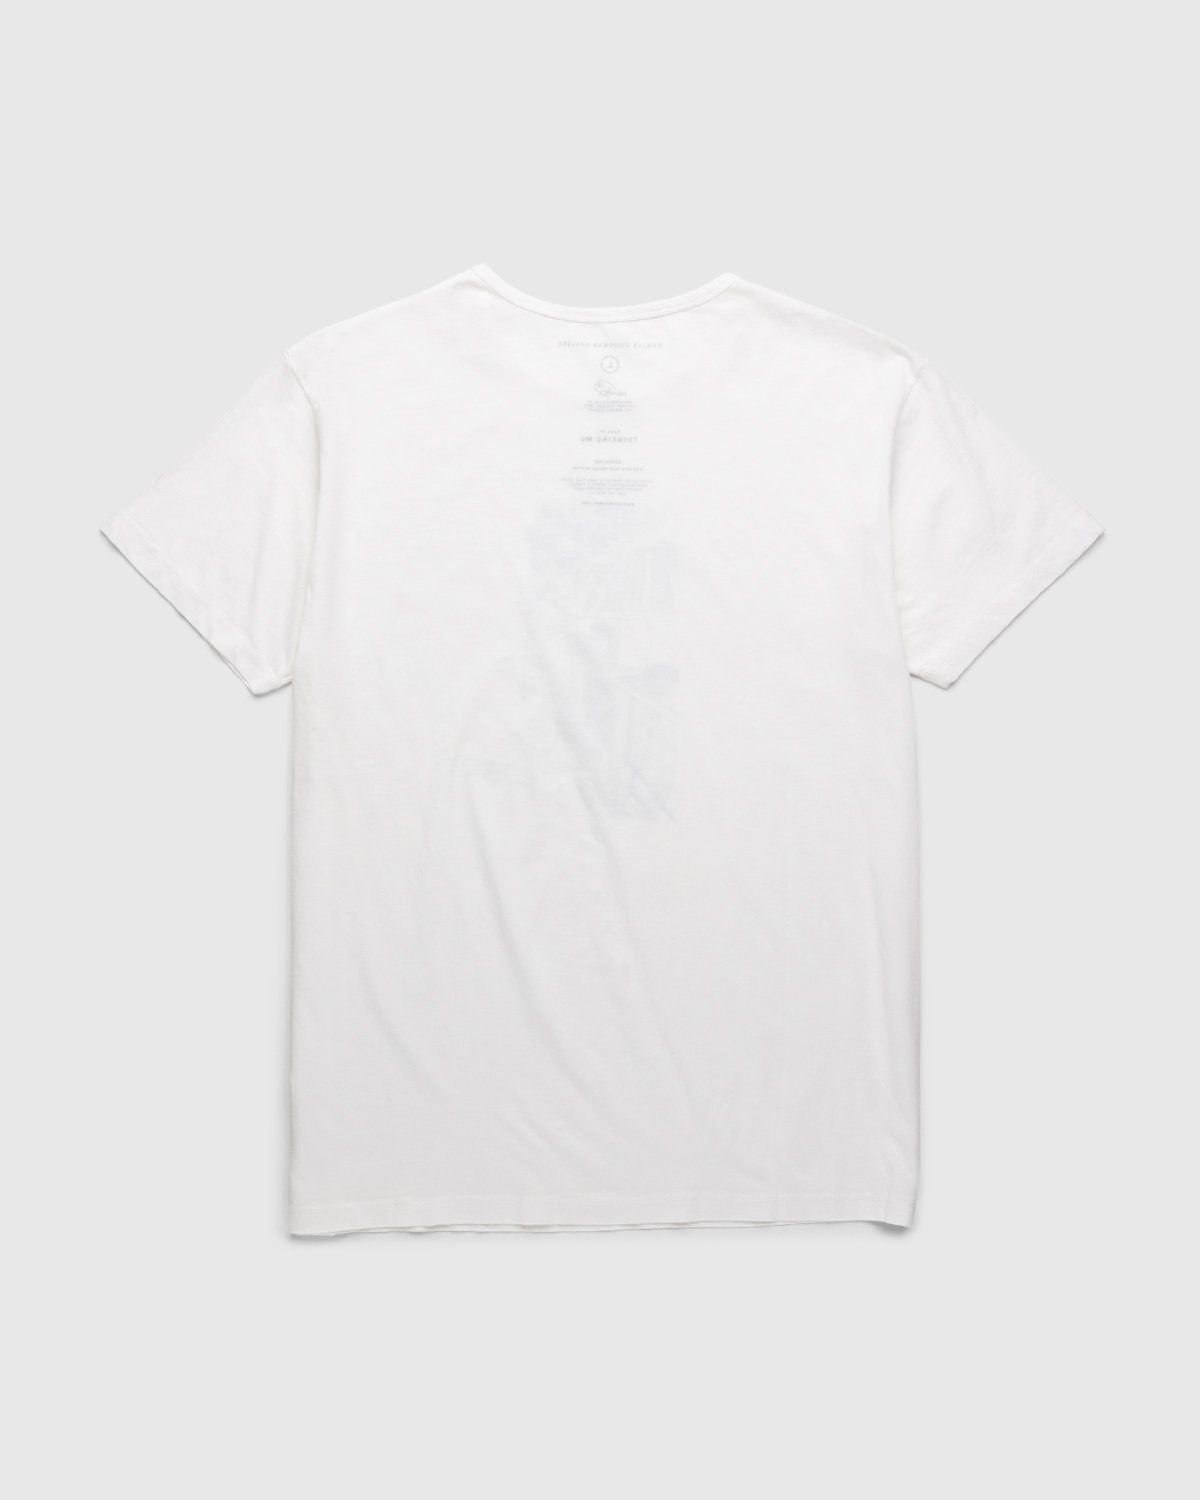 Mieko Meguro x Dan Graham – T-Shirt - T-shirts - White - Image 2